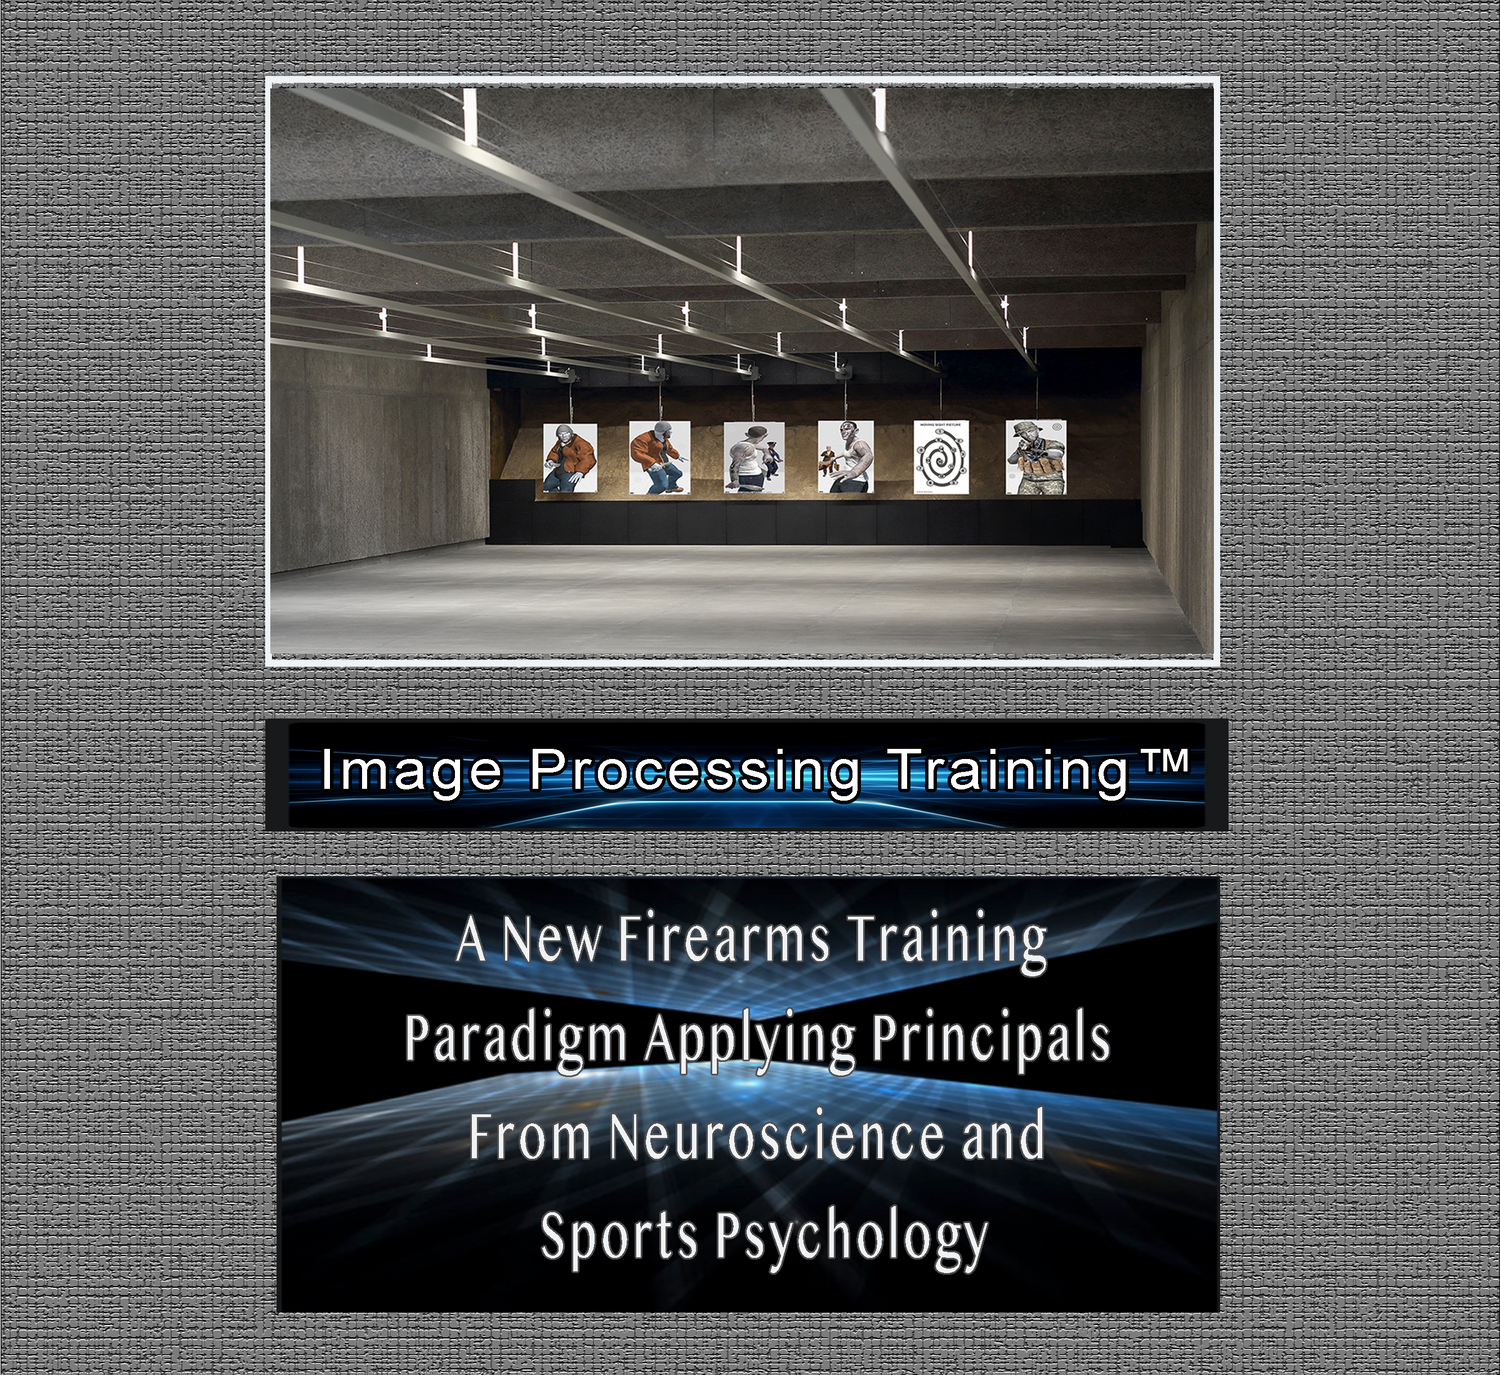 Image Processing Training (IPT™)